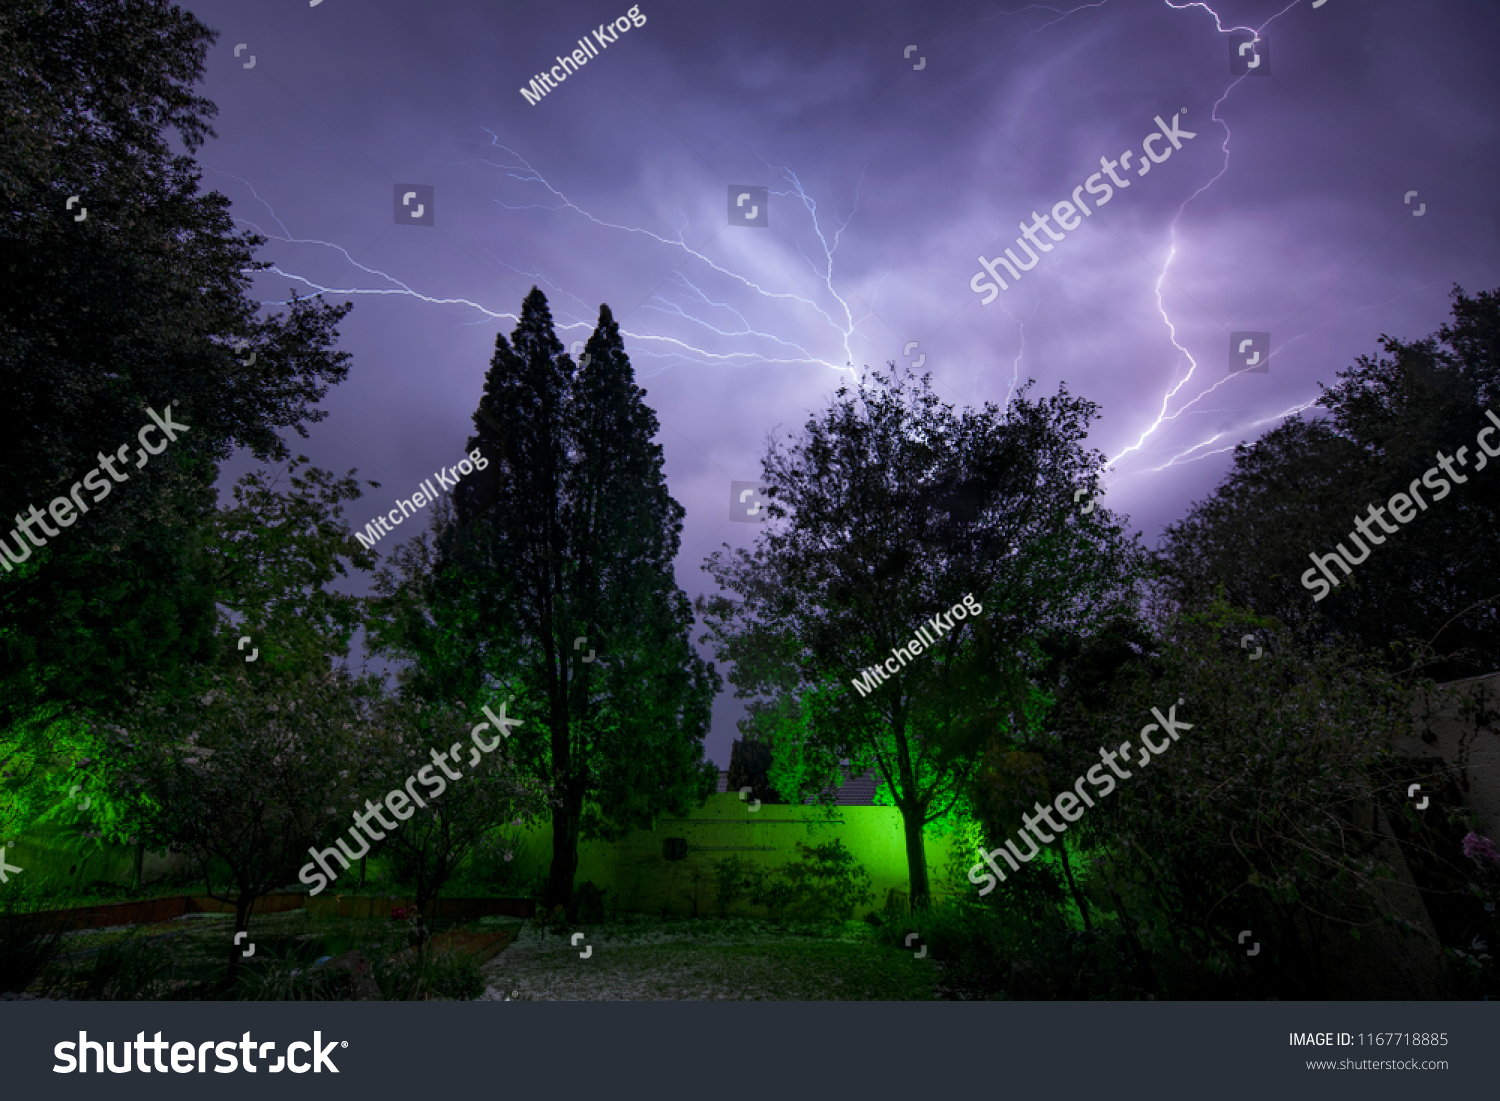 Storm purple hail Severe weather